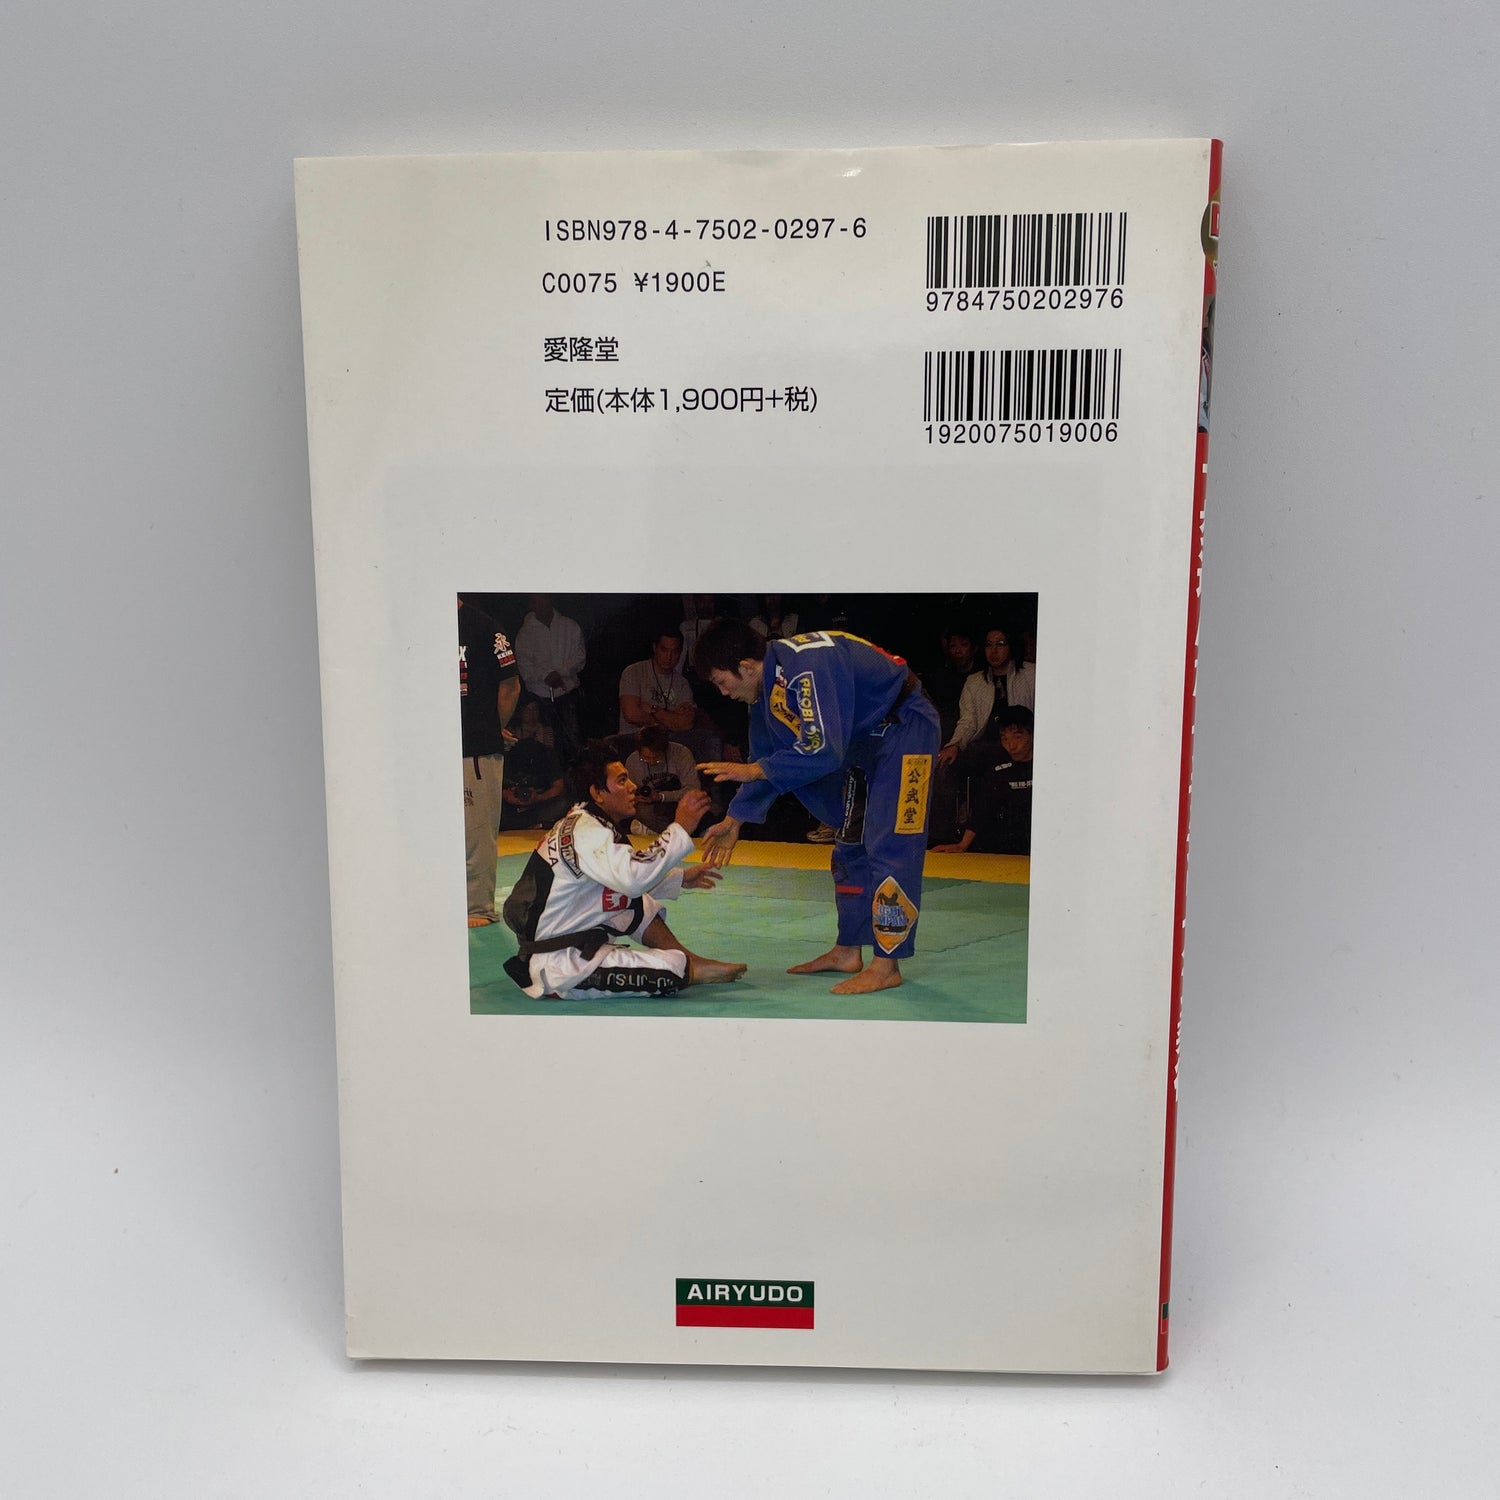 One Step Further BJJ Book & DVD by Marcos Souza & Roberto Satoshi Souza